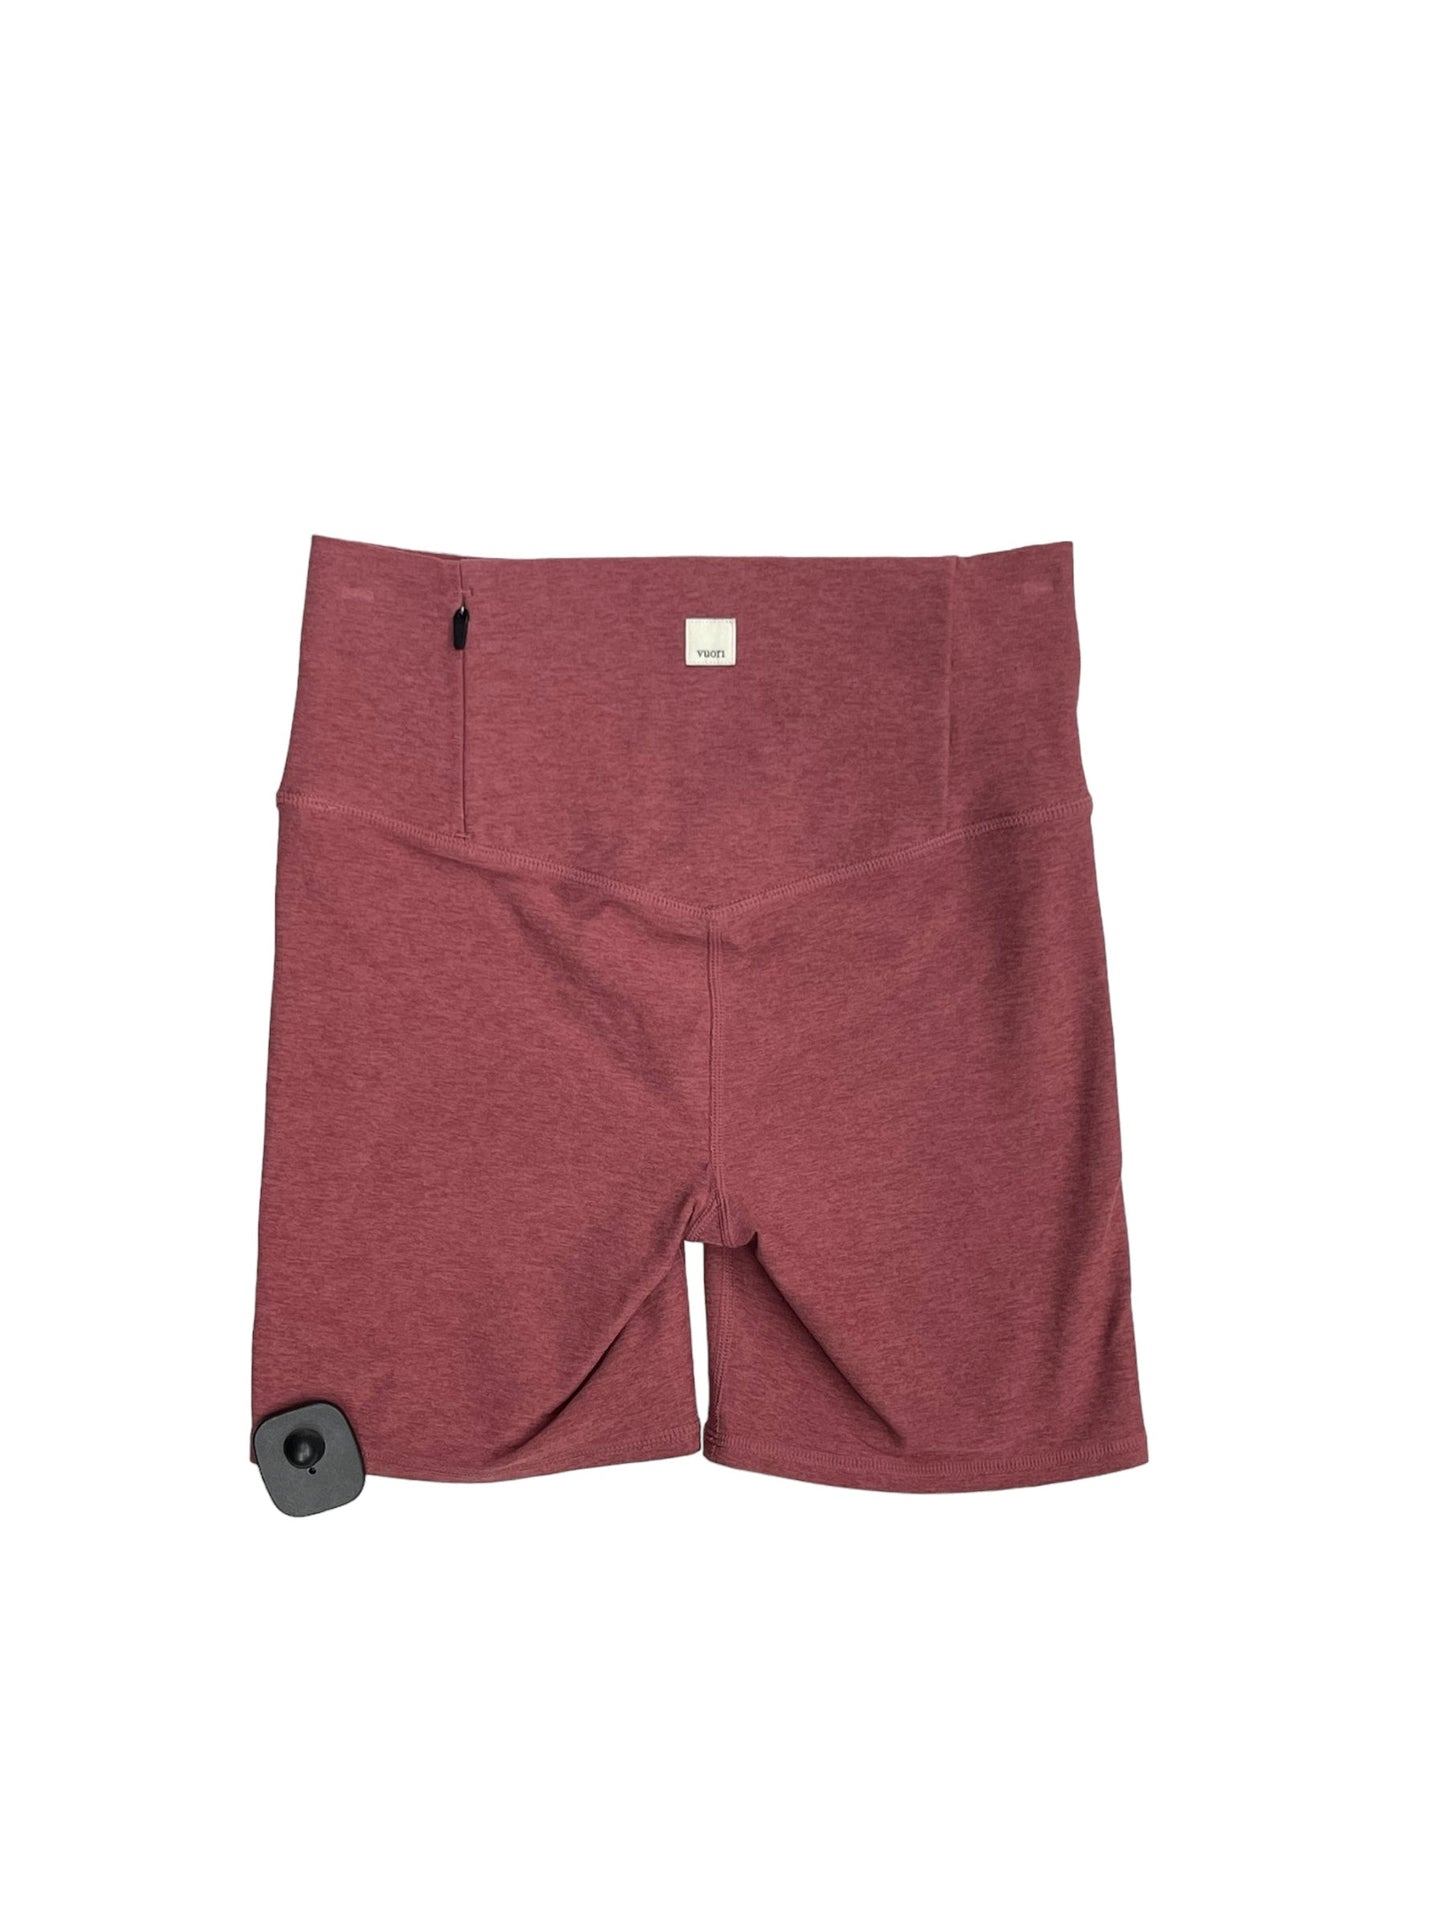 Pink Athletic Shorts Vuori, Size S